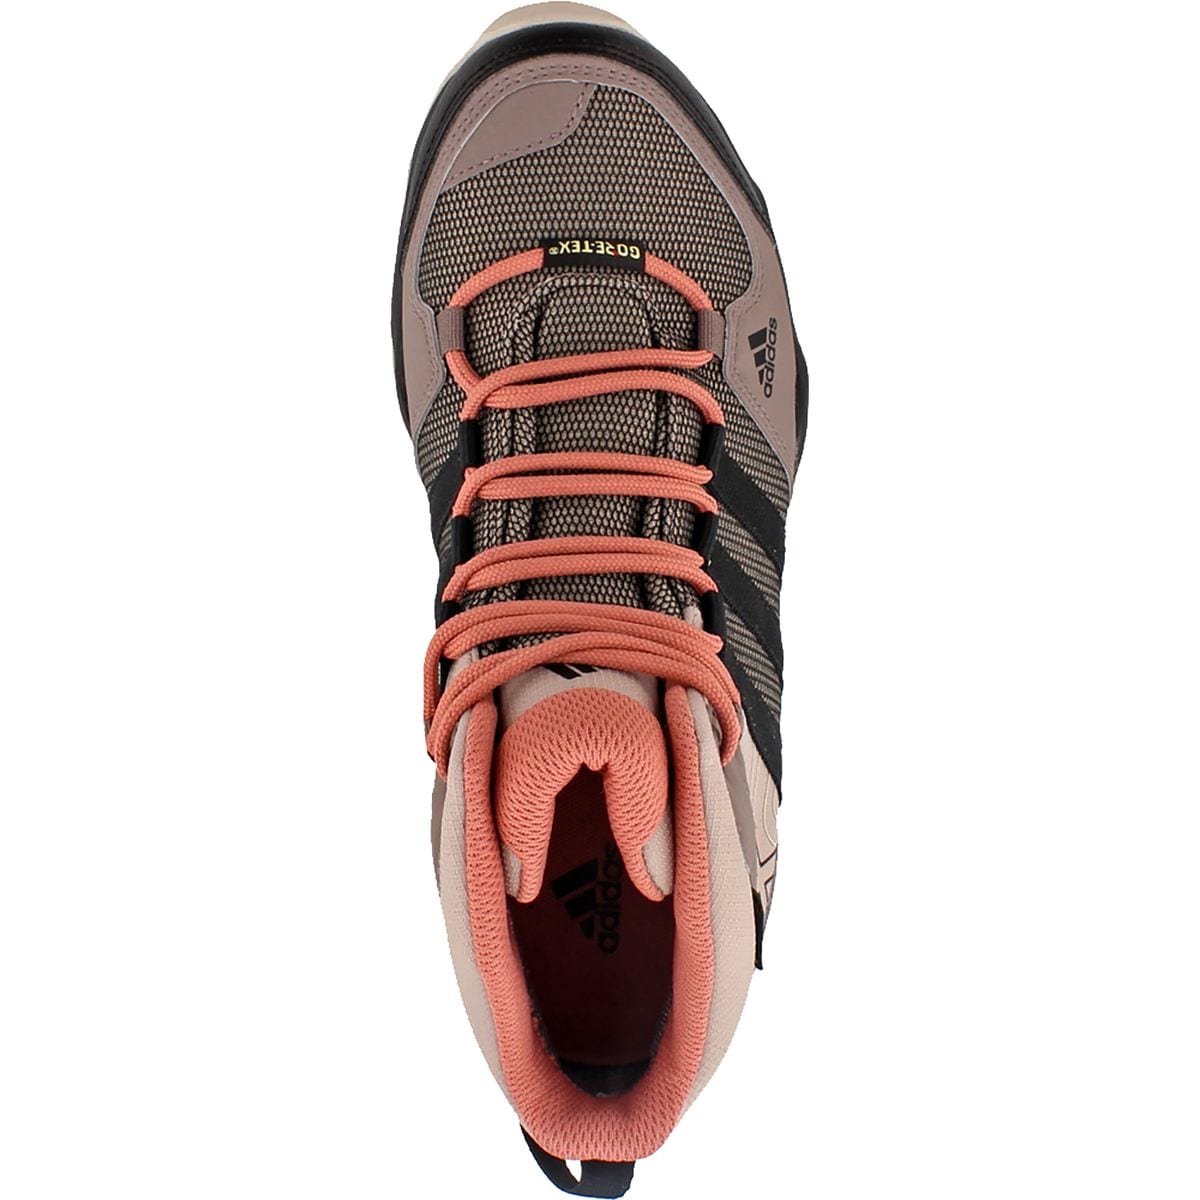 Adidas Outdoor AX2 Mid GTX Hiking Boot - Women's | eBay